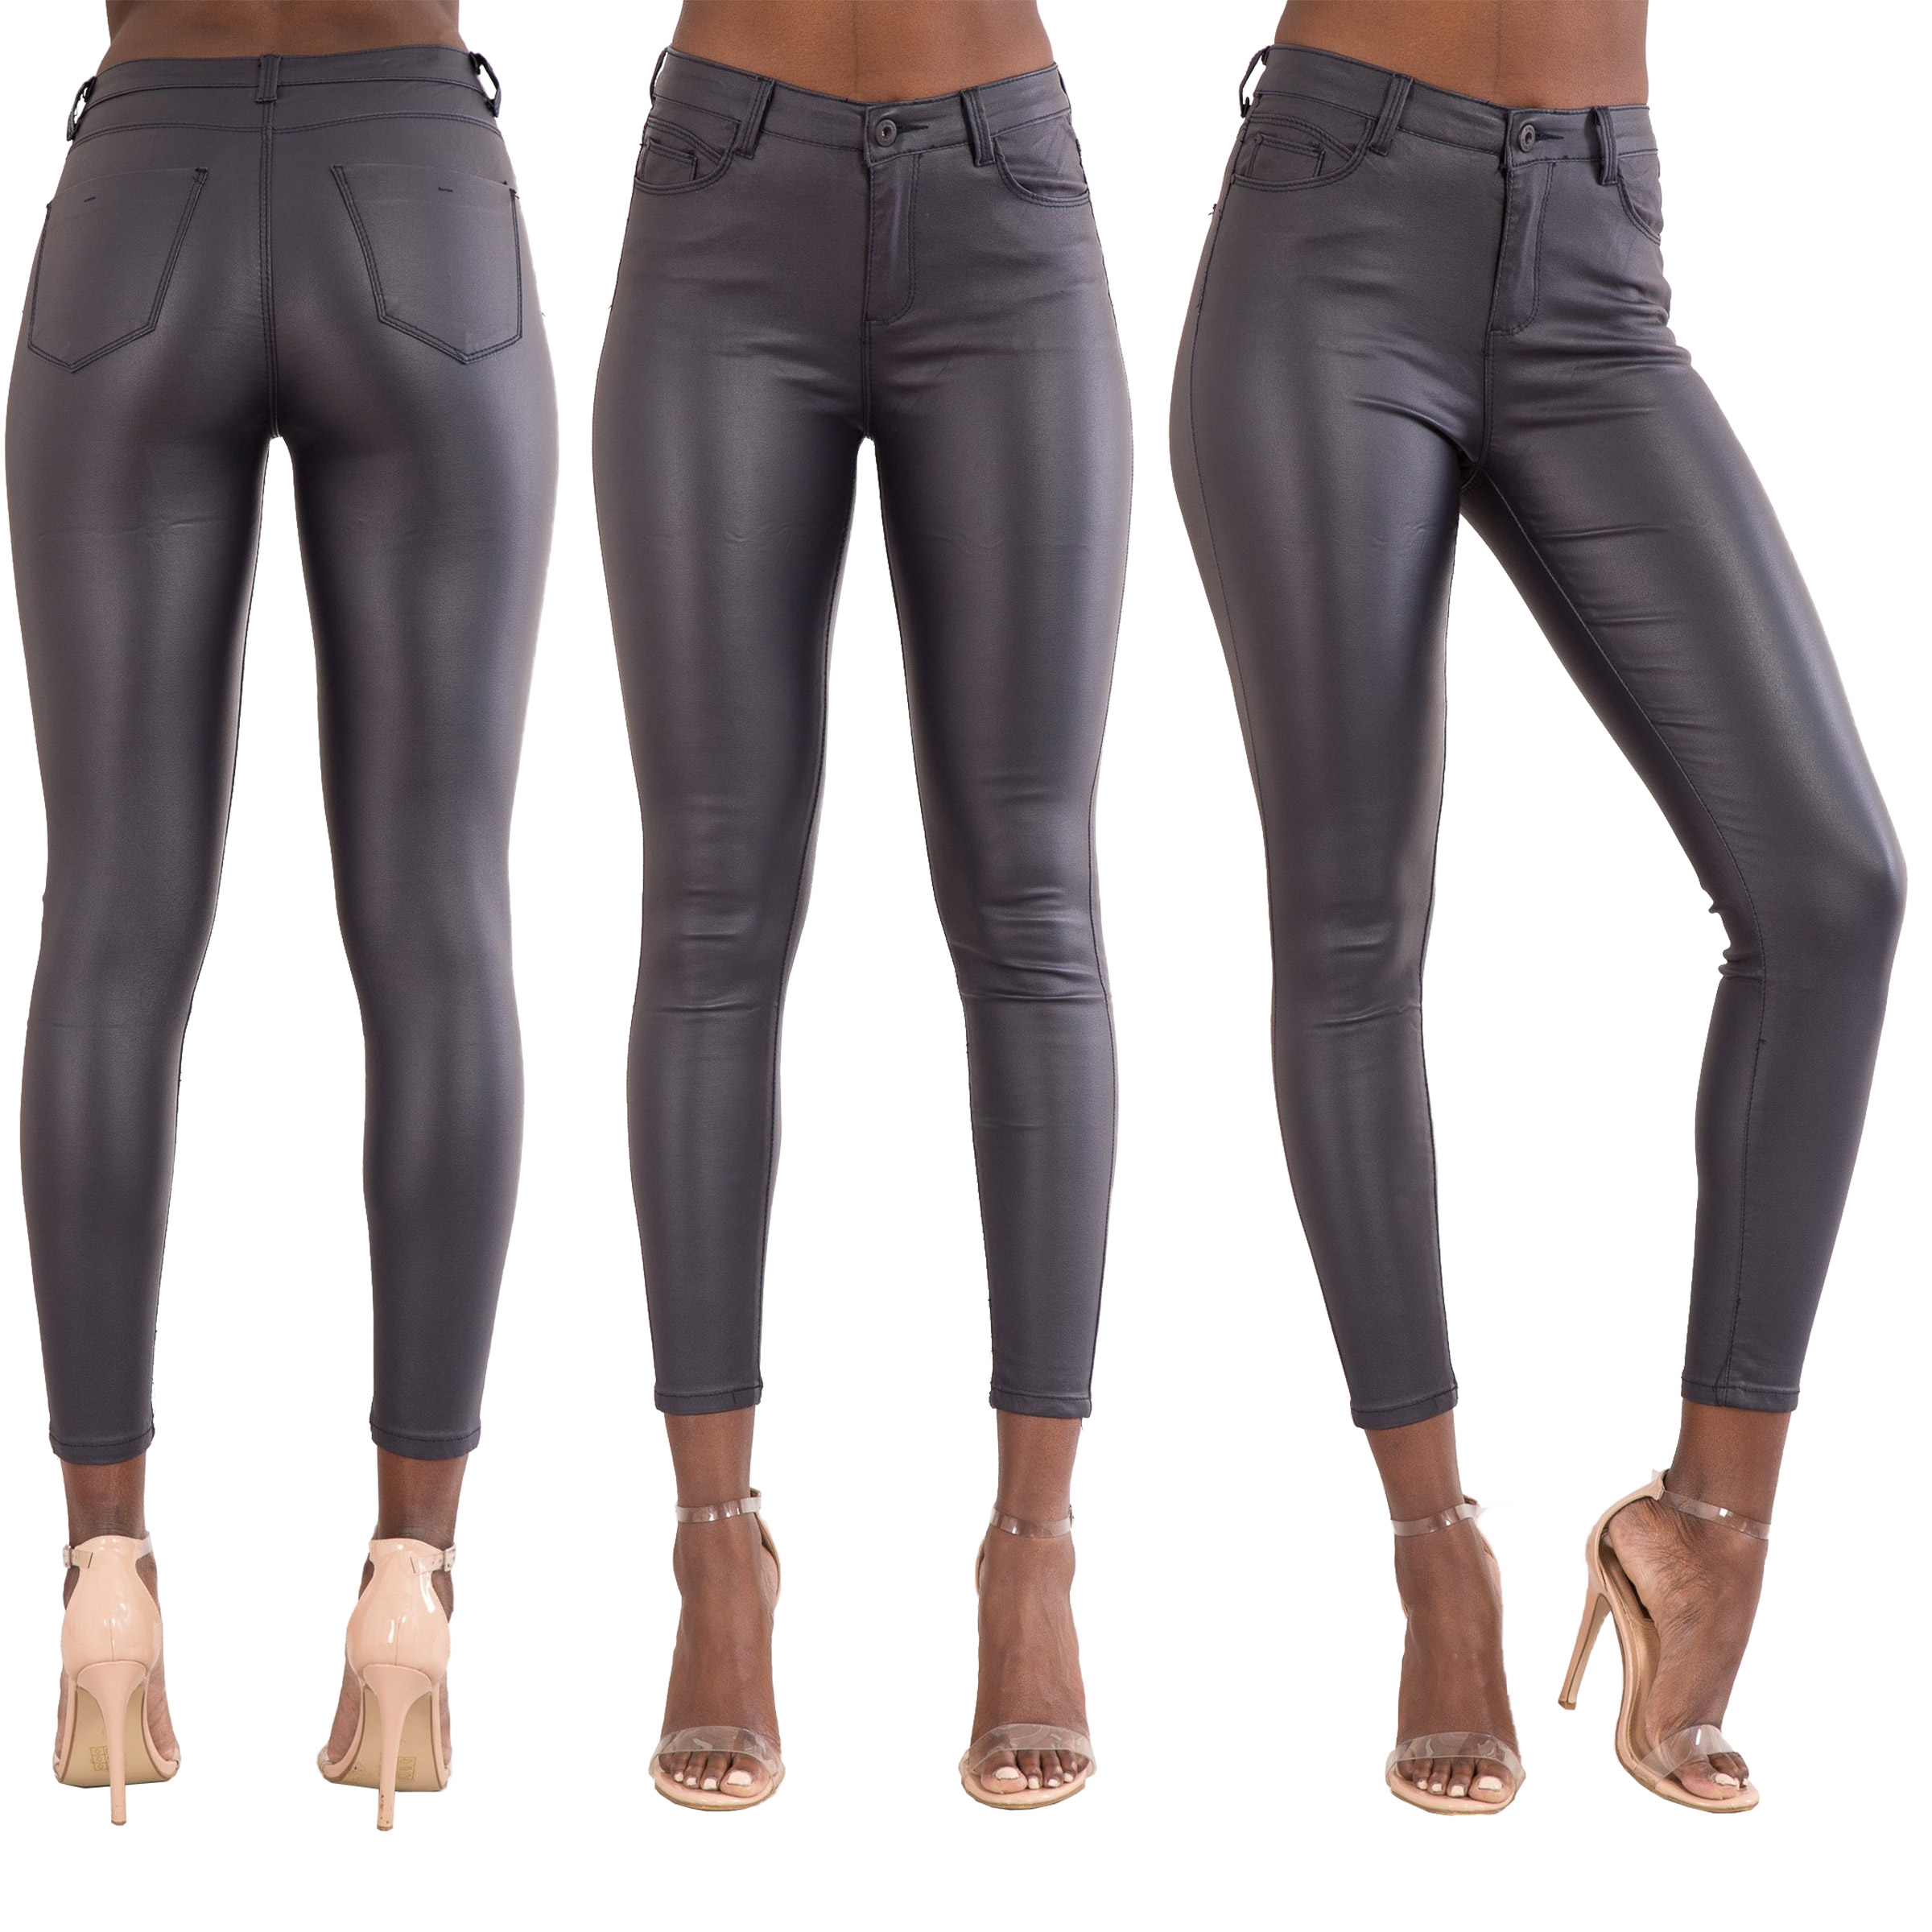 Womens Black Wet Look Leather Jeans Skinny Trouser Leggings Size 6 8 10 ...